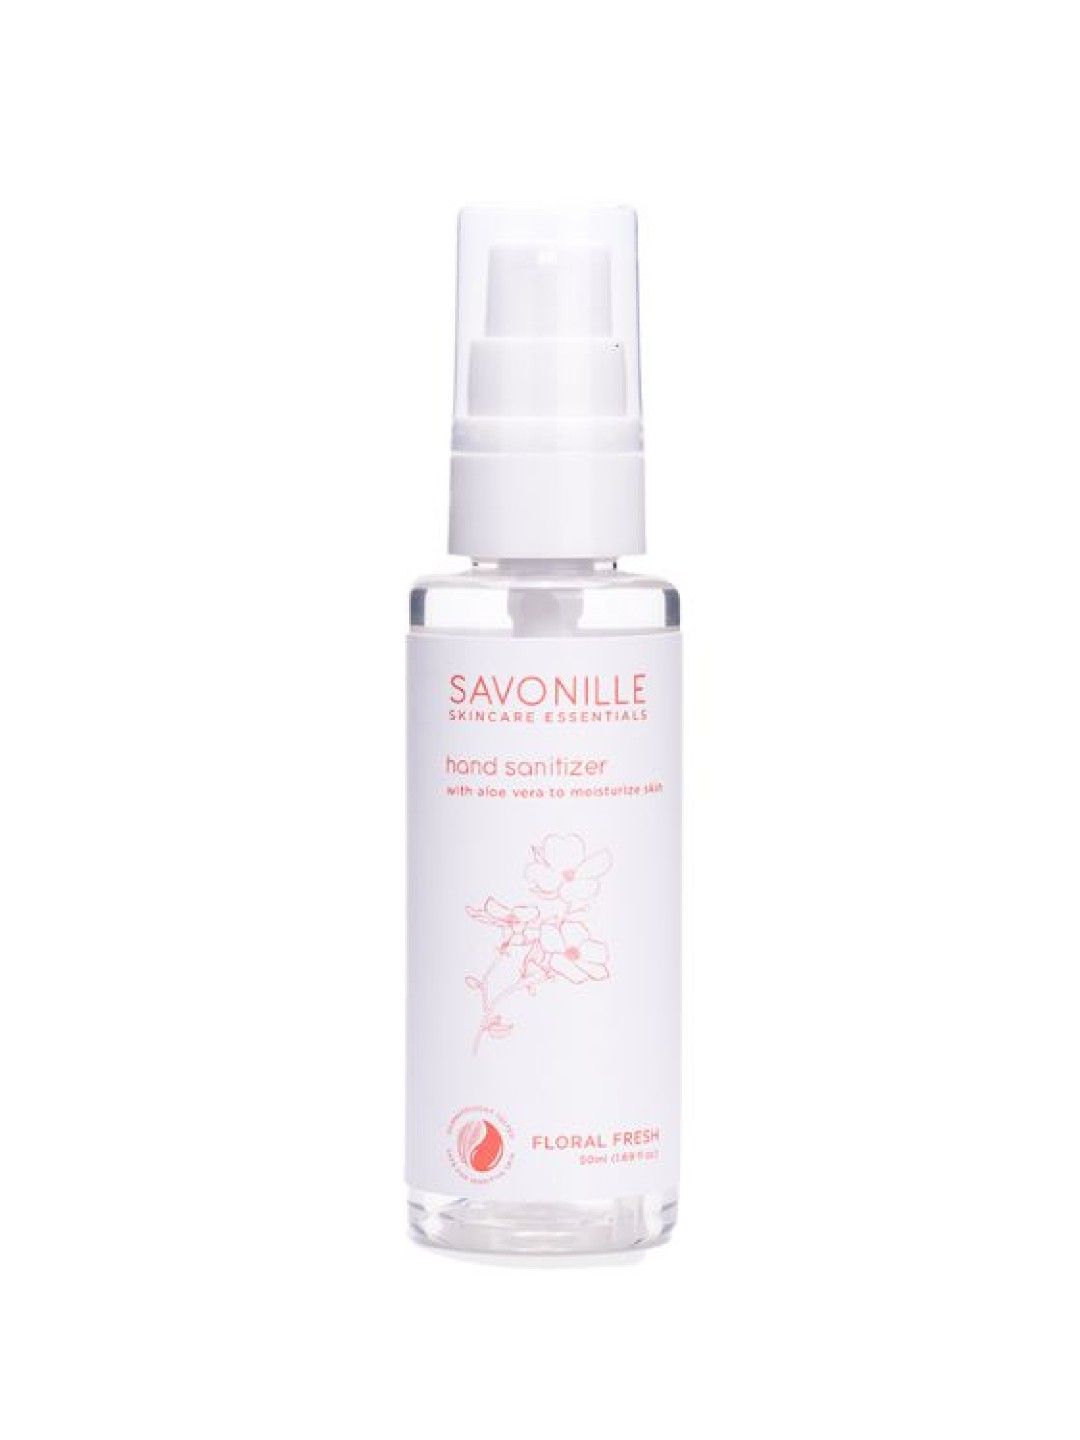 Savonille Skincare Essentials Floral Fresh Travel Trio (No Color- Image 2)